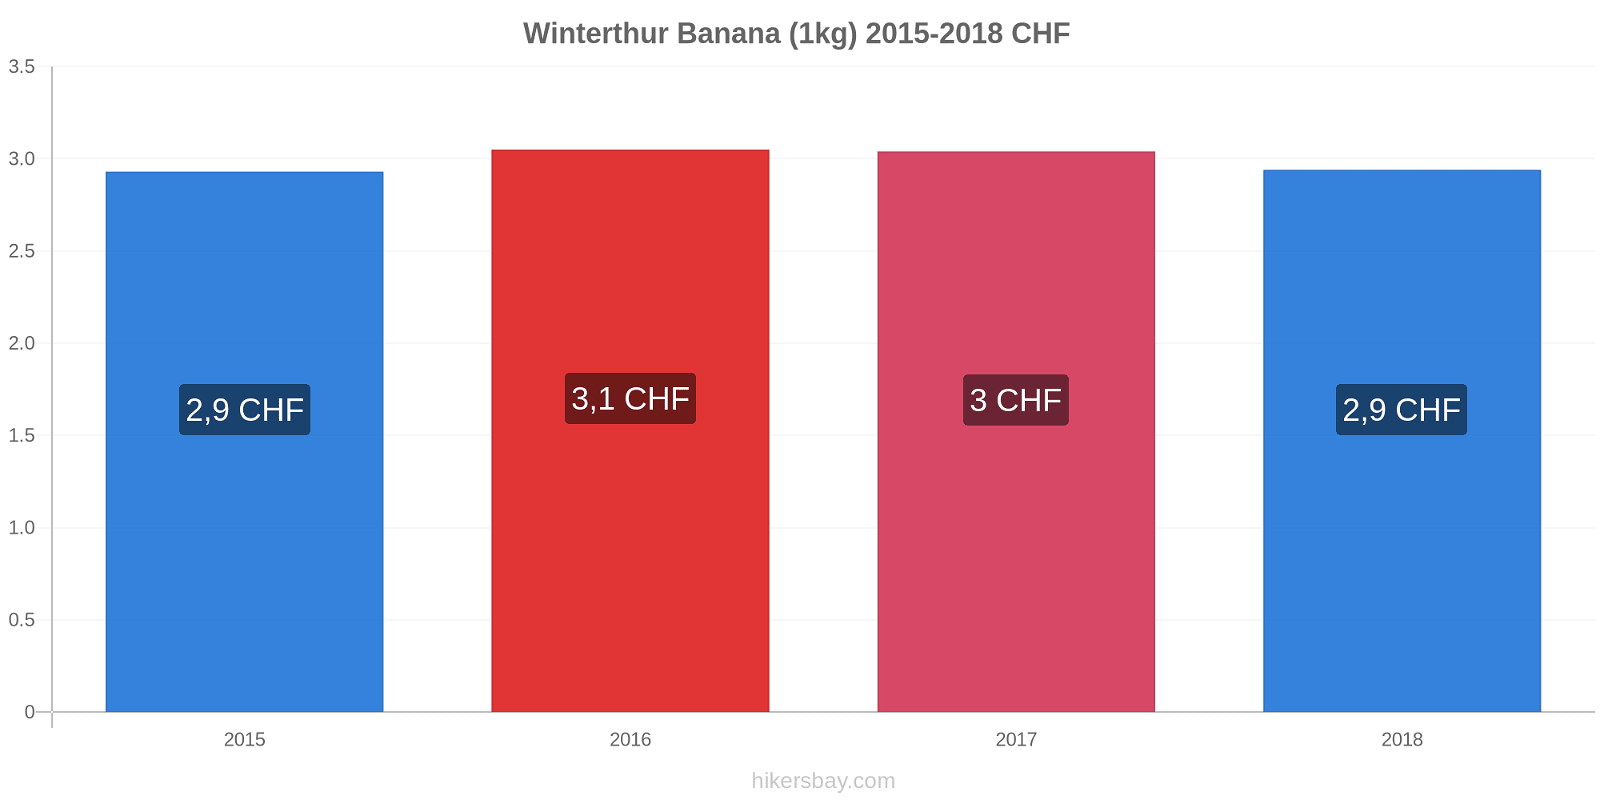 Winterthur variazioni di prezzo Banana (1kg) hikersbay.com